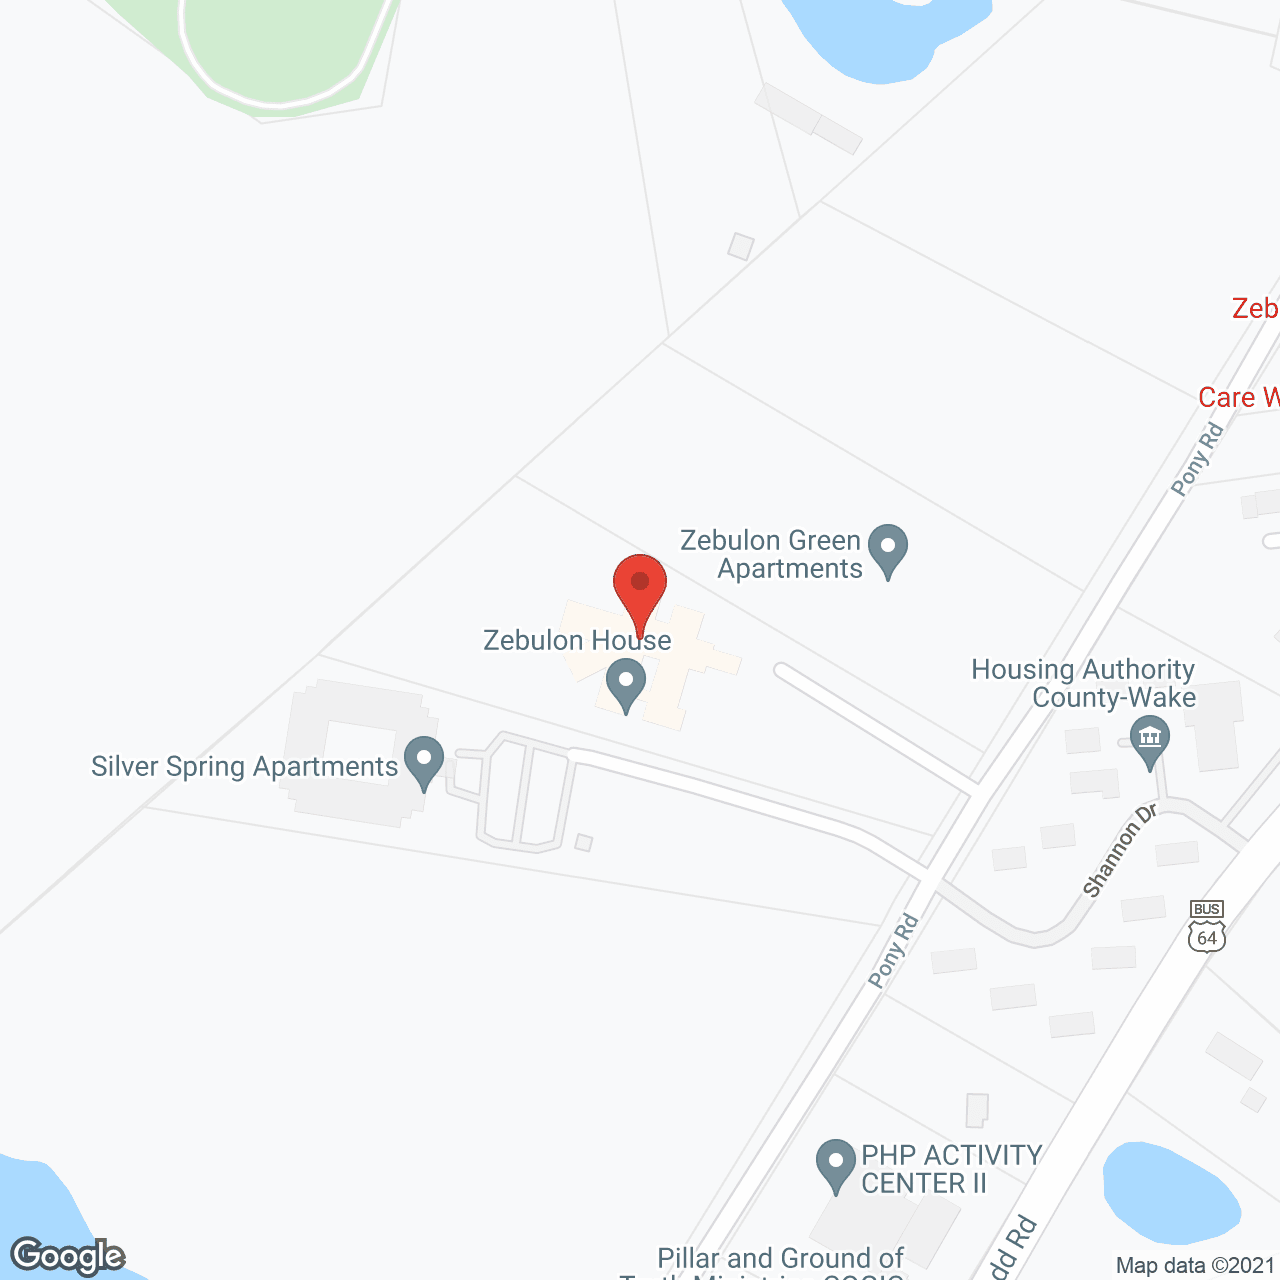 Zebulon House in google map